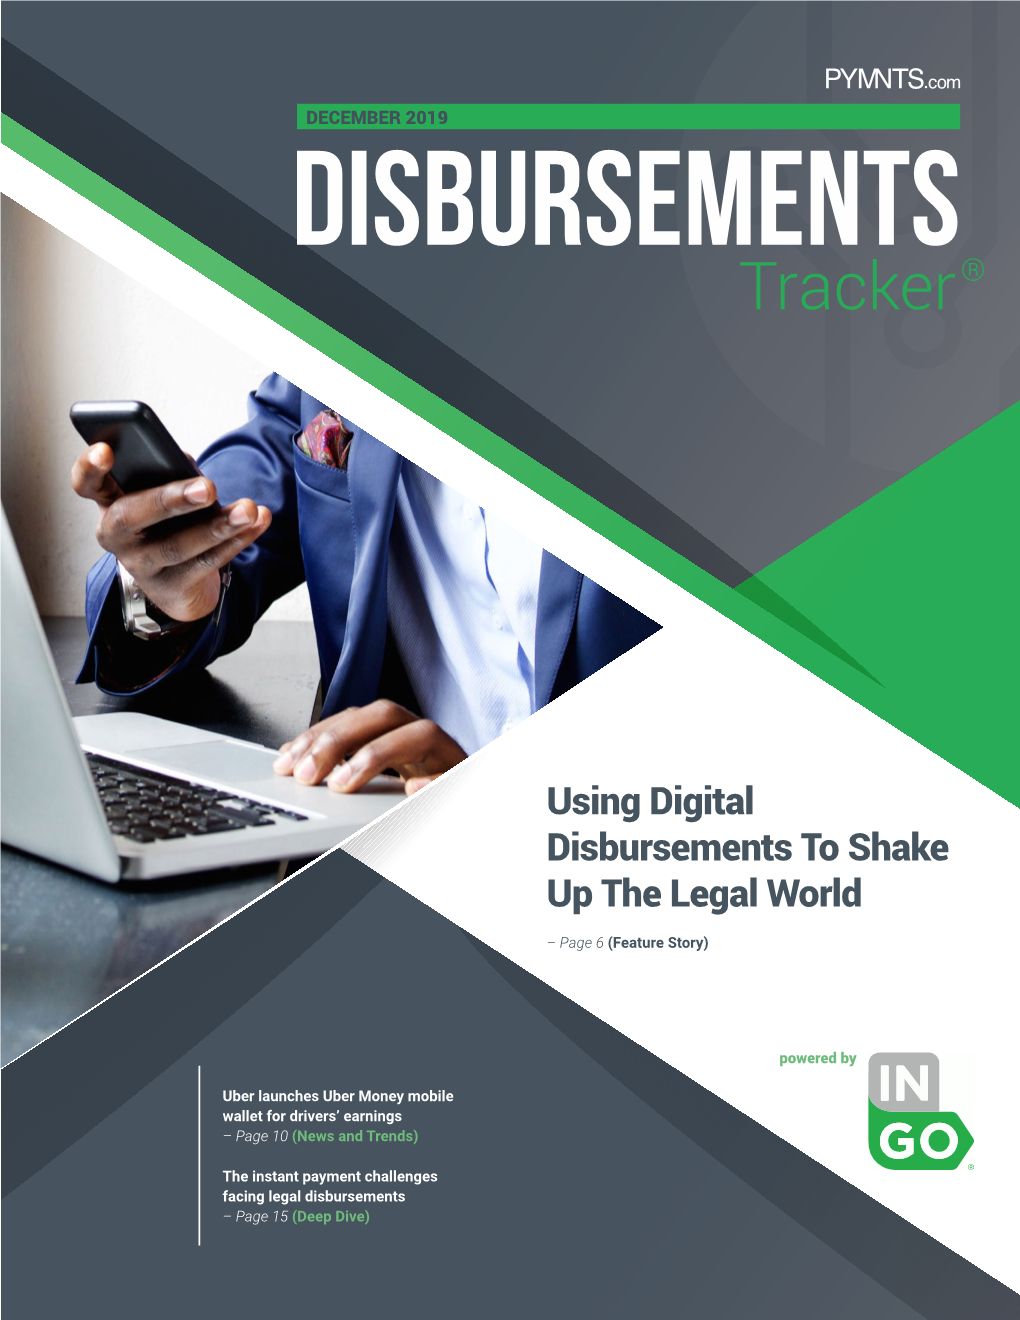 Using Digital Disbursements to Shake up the Legal World